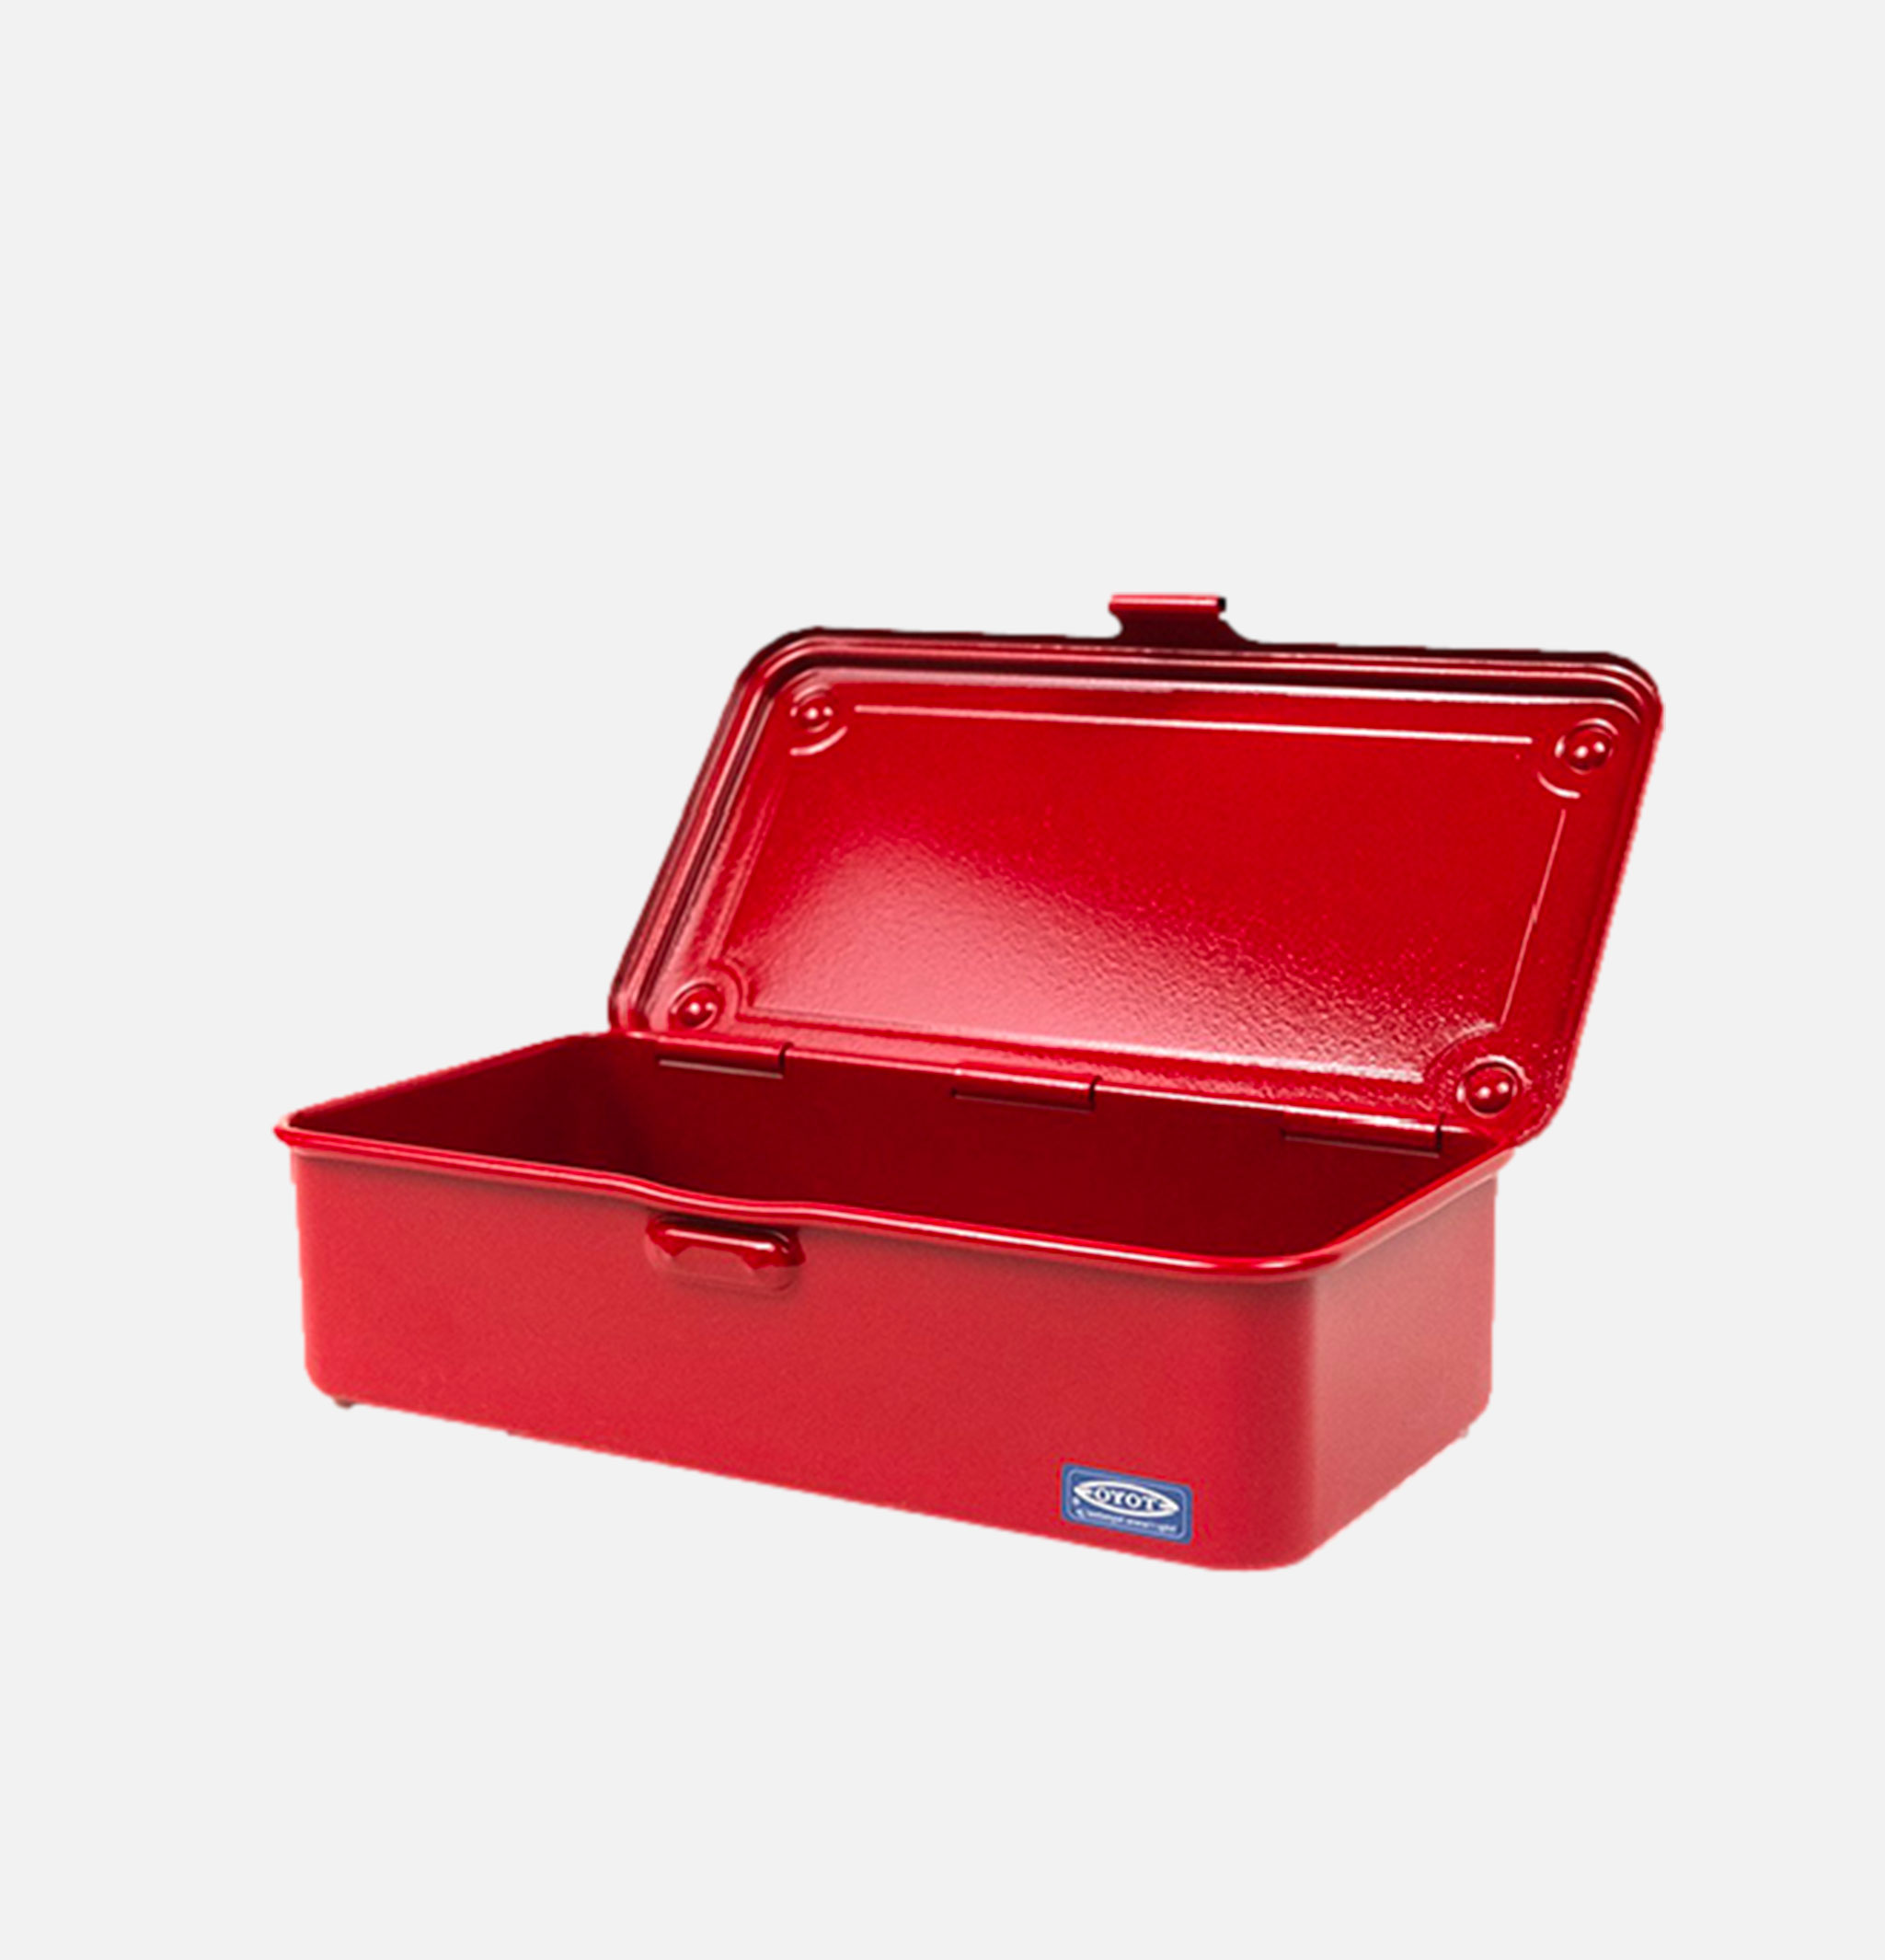 Toyo Antique Red tool box